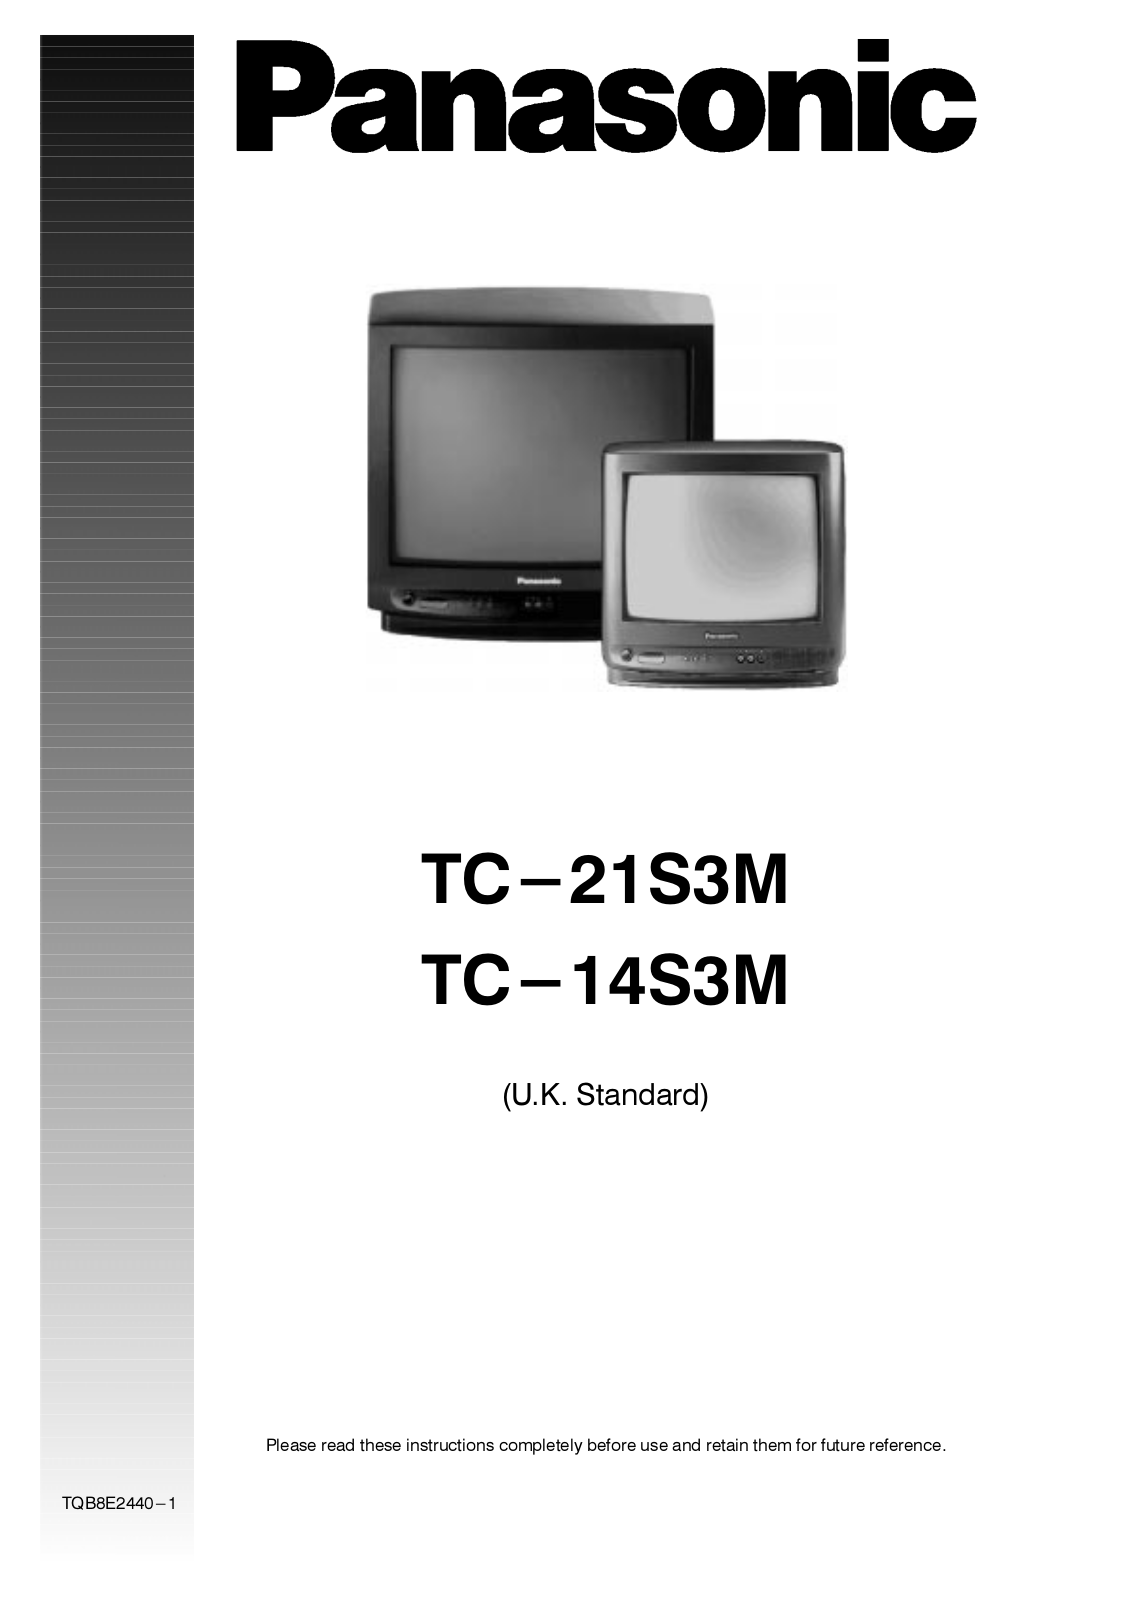 Panasonic TC-14S3M User Manual